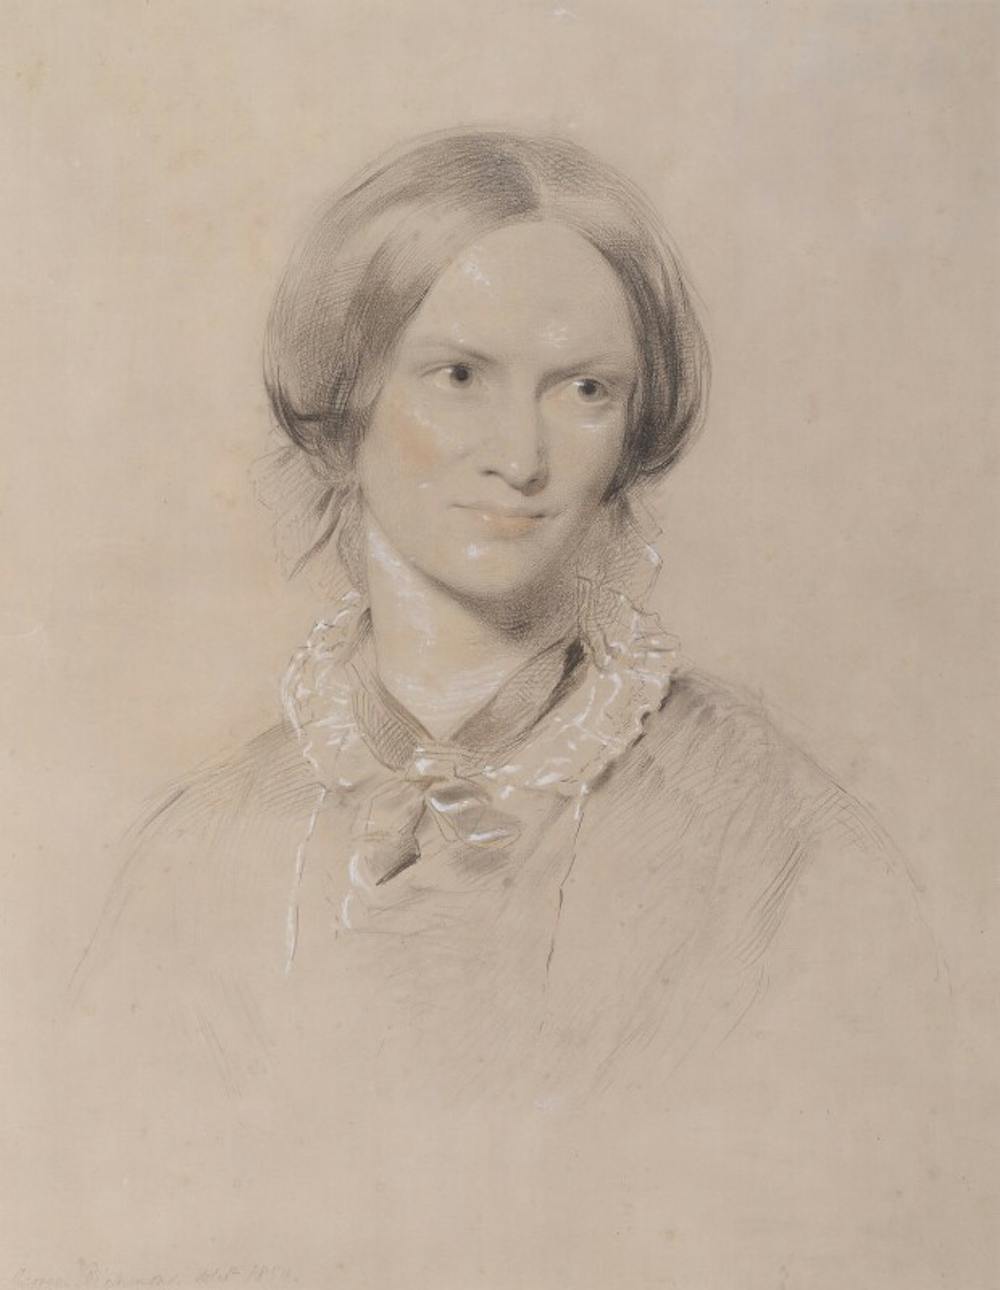 The Aftermath Of The Life Of Charlotte Brontë – Anne Brontë